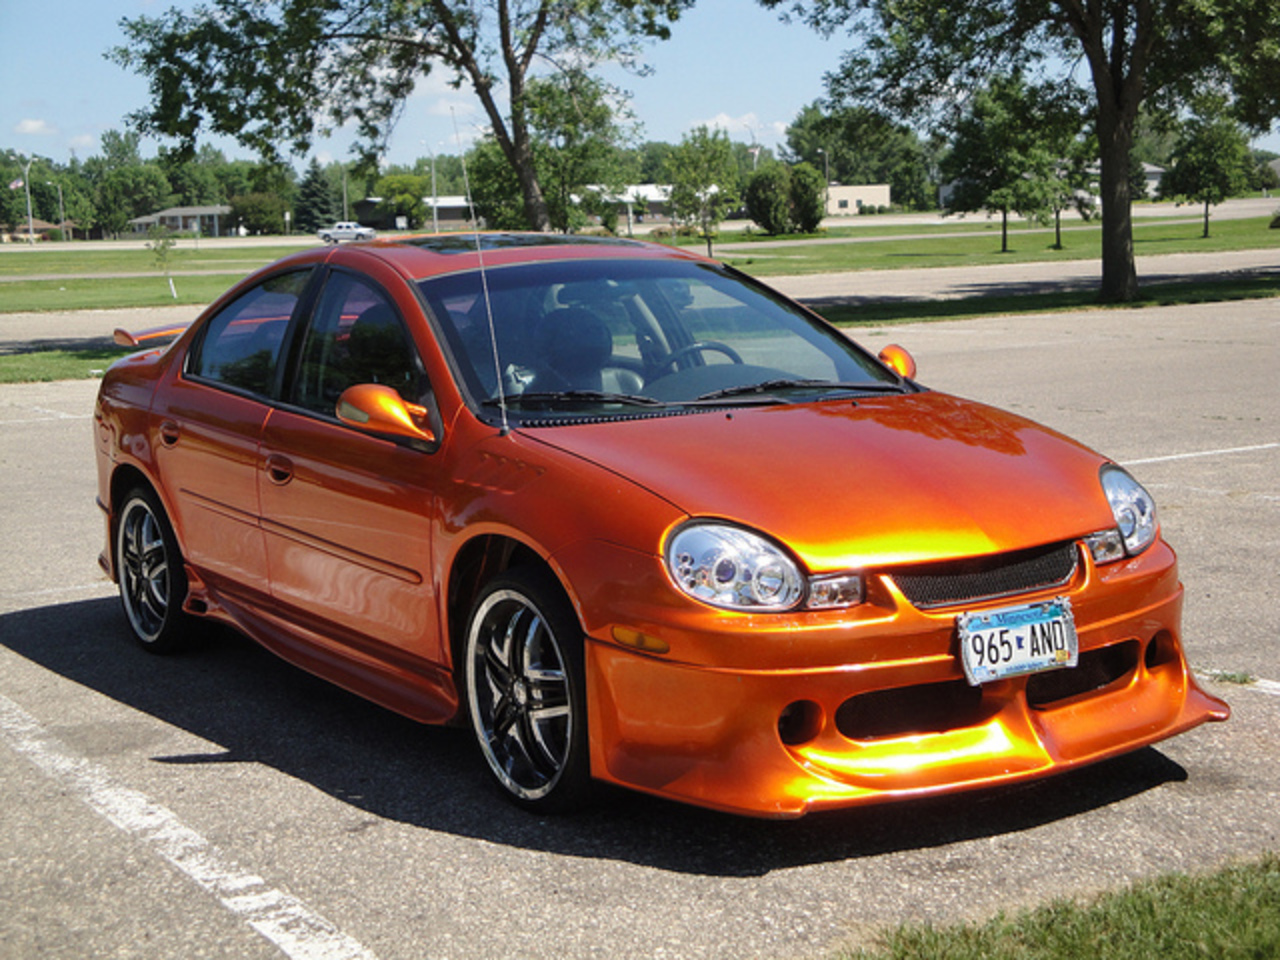 01 Dodge Neon | Flickr - Photo Sharing!